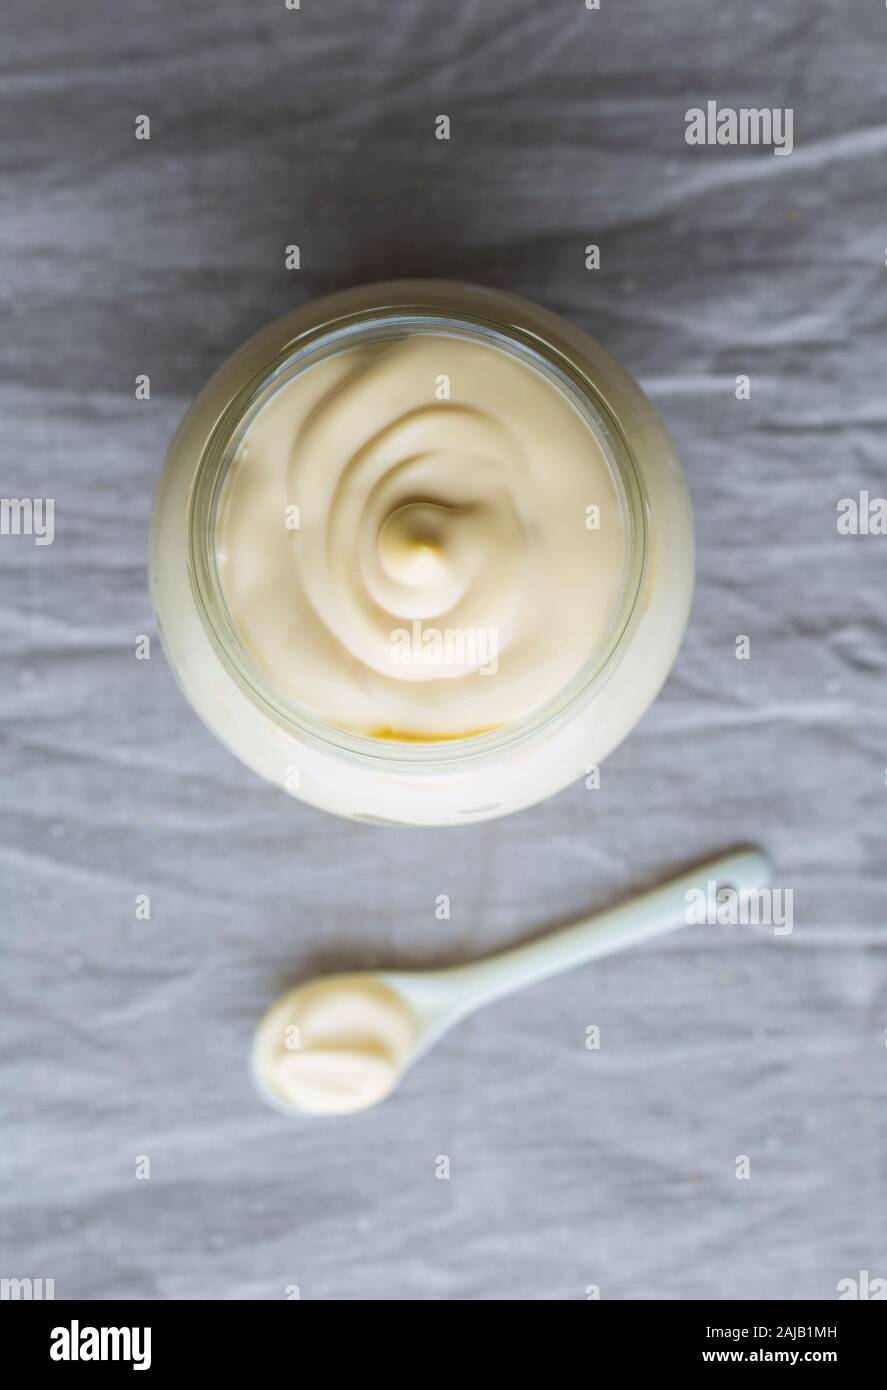 Sour cream in a glass jar. Stock Photo